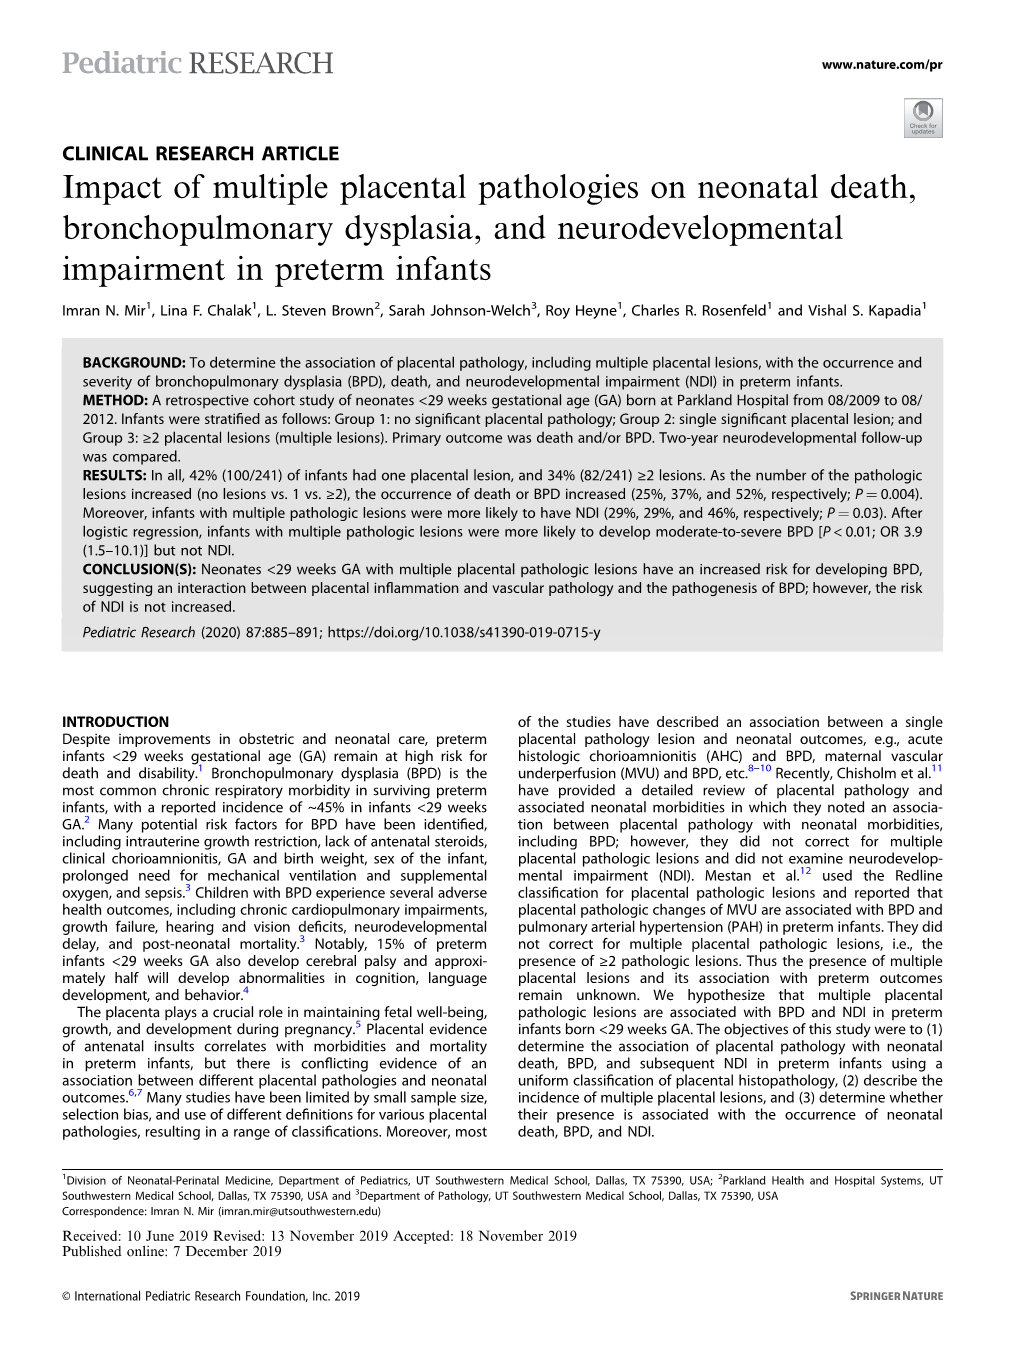 Impact of Multiple Placental Pathologies on Neonatal Death, Bronchopulmonary Dysplasia, and Neurodevelopmental Impairment in Preterm Infants